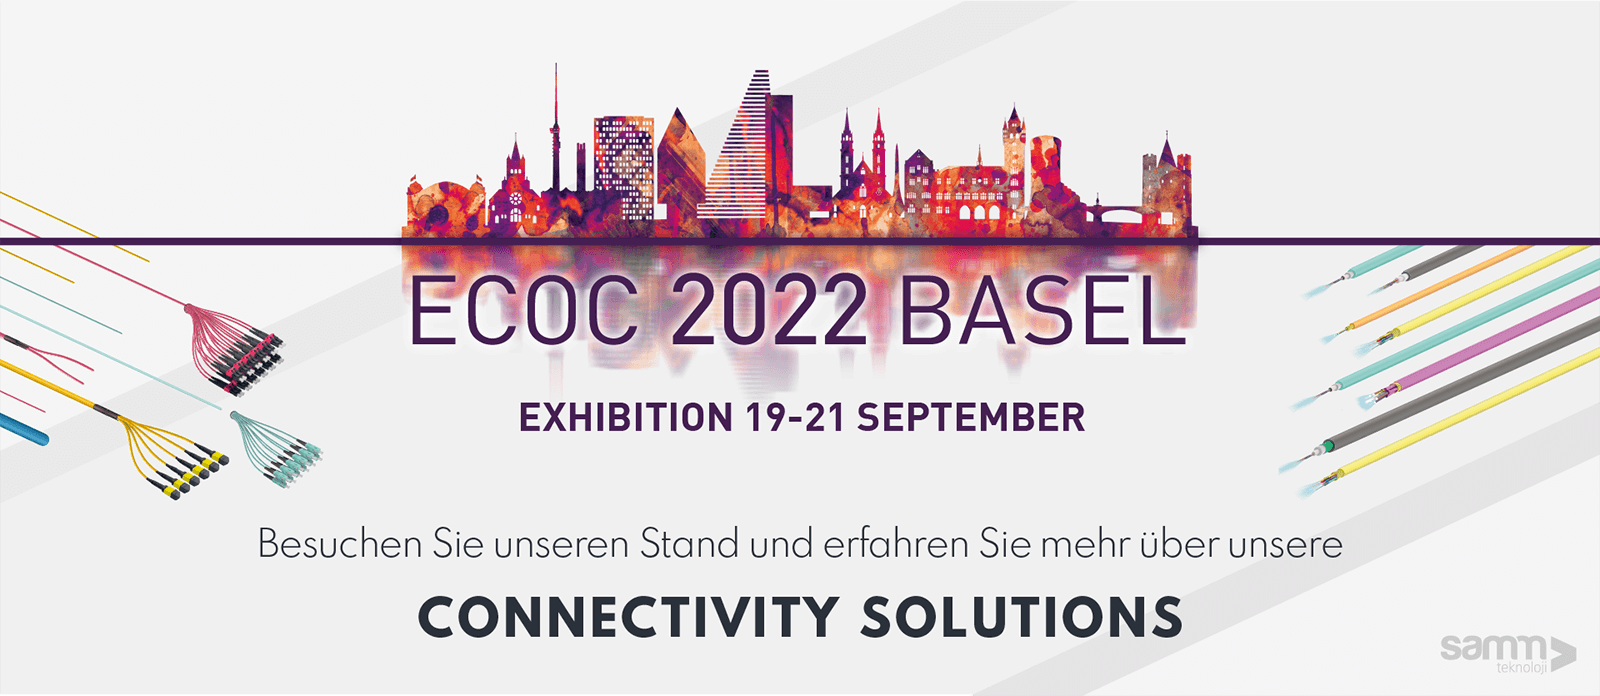 Samm Teknoloji nimmt an der Basler Ausstellung ECOC 2022 teil